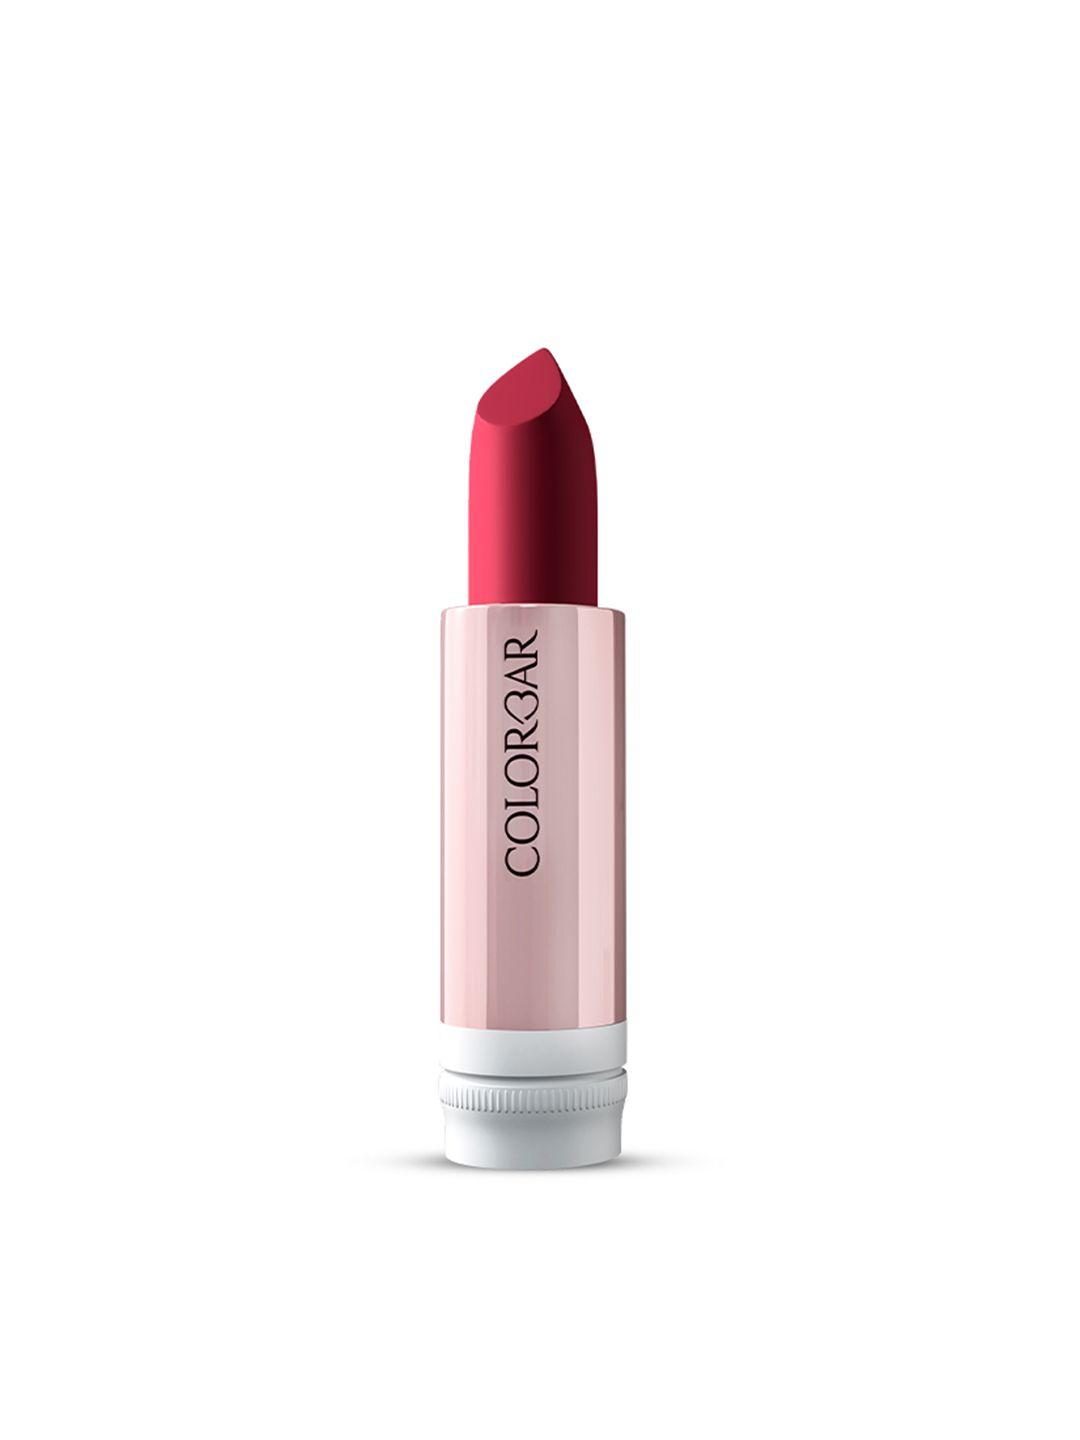 Colorbar Take Me As I Am Vegan Matte Lipstick Refill with Vitamin E - Cherry Bomb 006